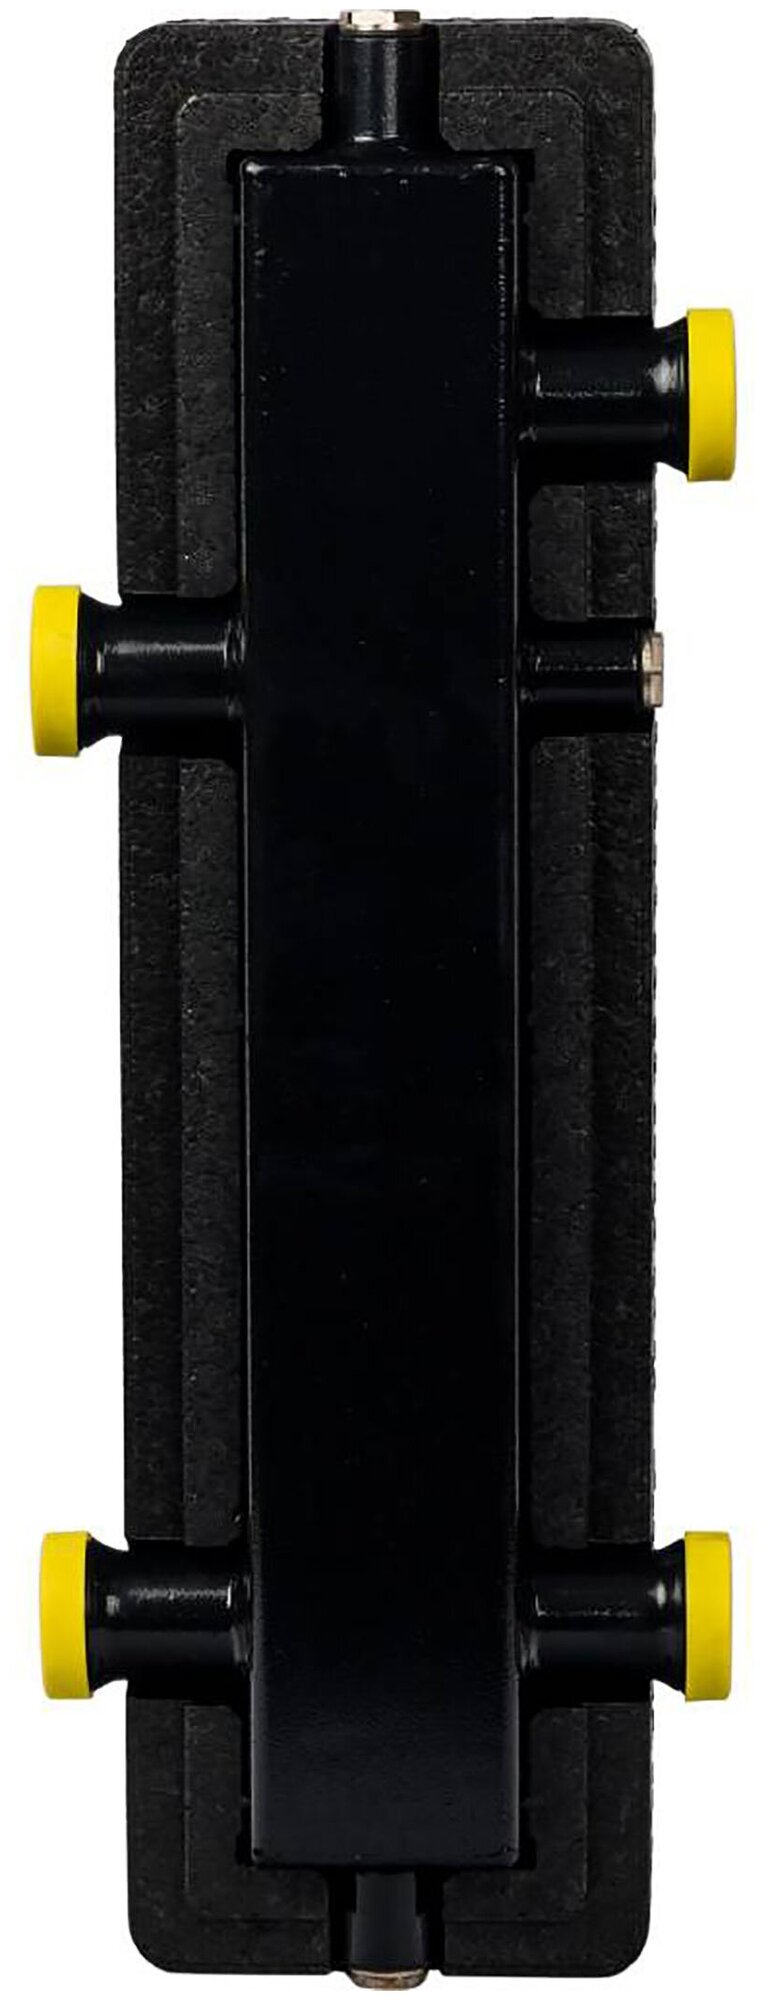 Разделитель гидравлический (гидравлическая стрелка) Stout , 5 м3/час - фото №3